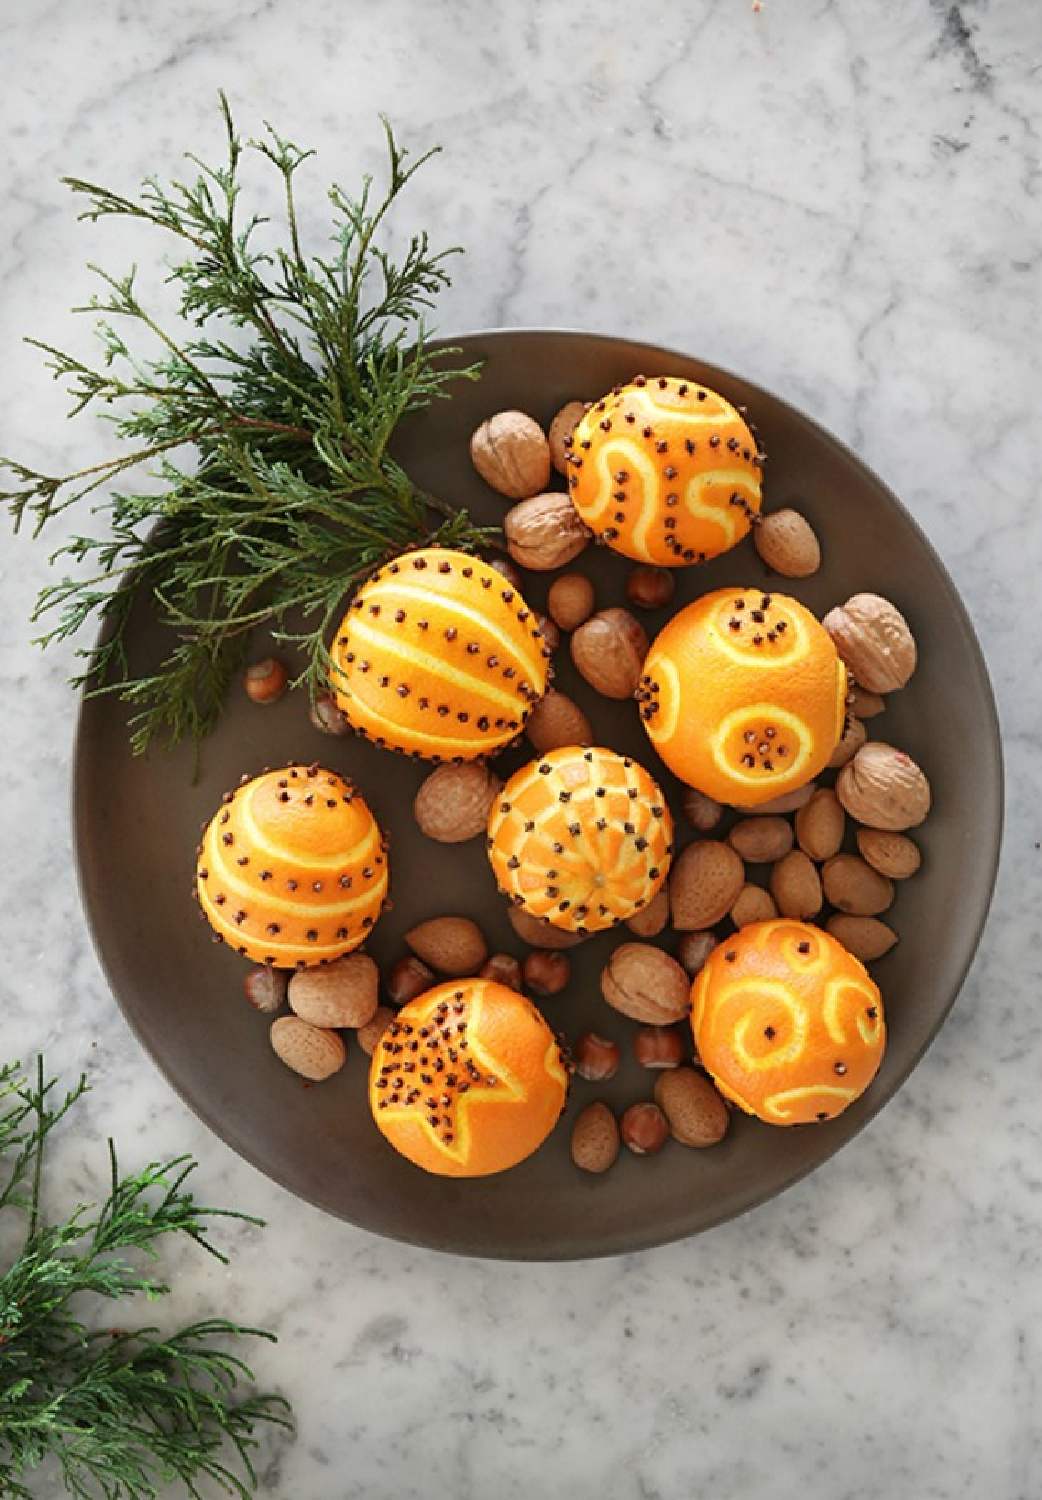 Oranges studded with cloves - Christmas pomander inspiration from Trendenser Sweden. #scandinavianchristmas #homemadechristmas #christmasdecor #oranges